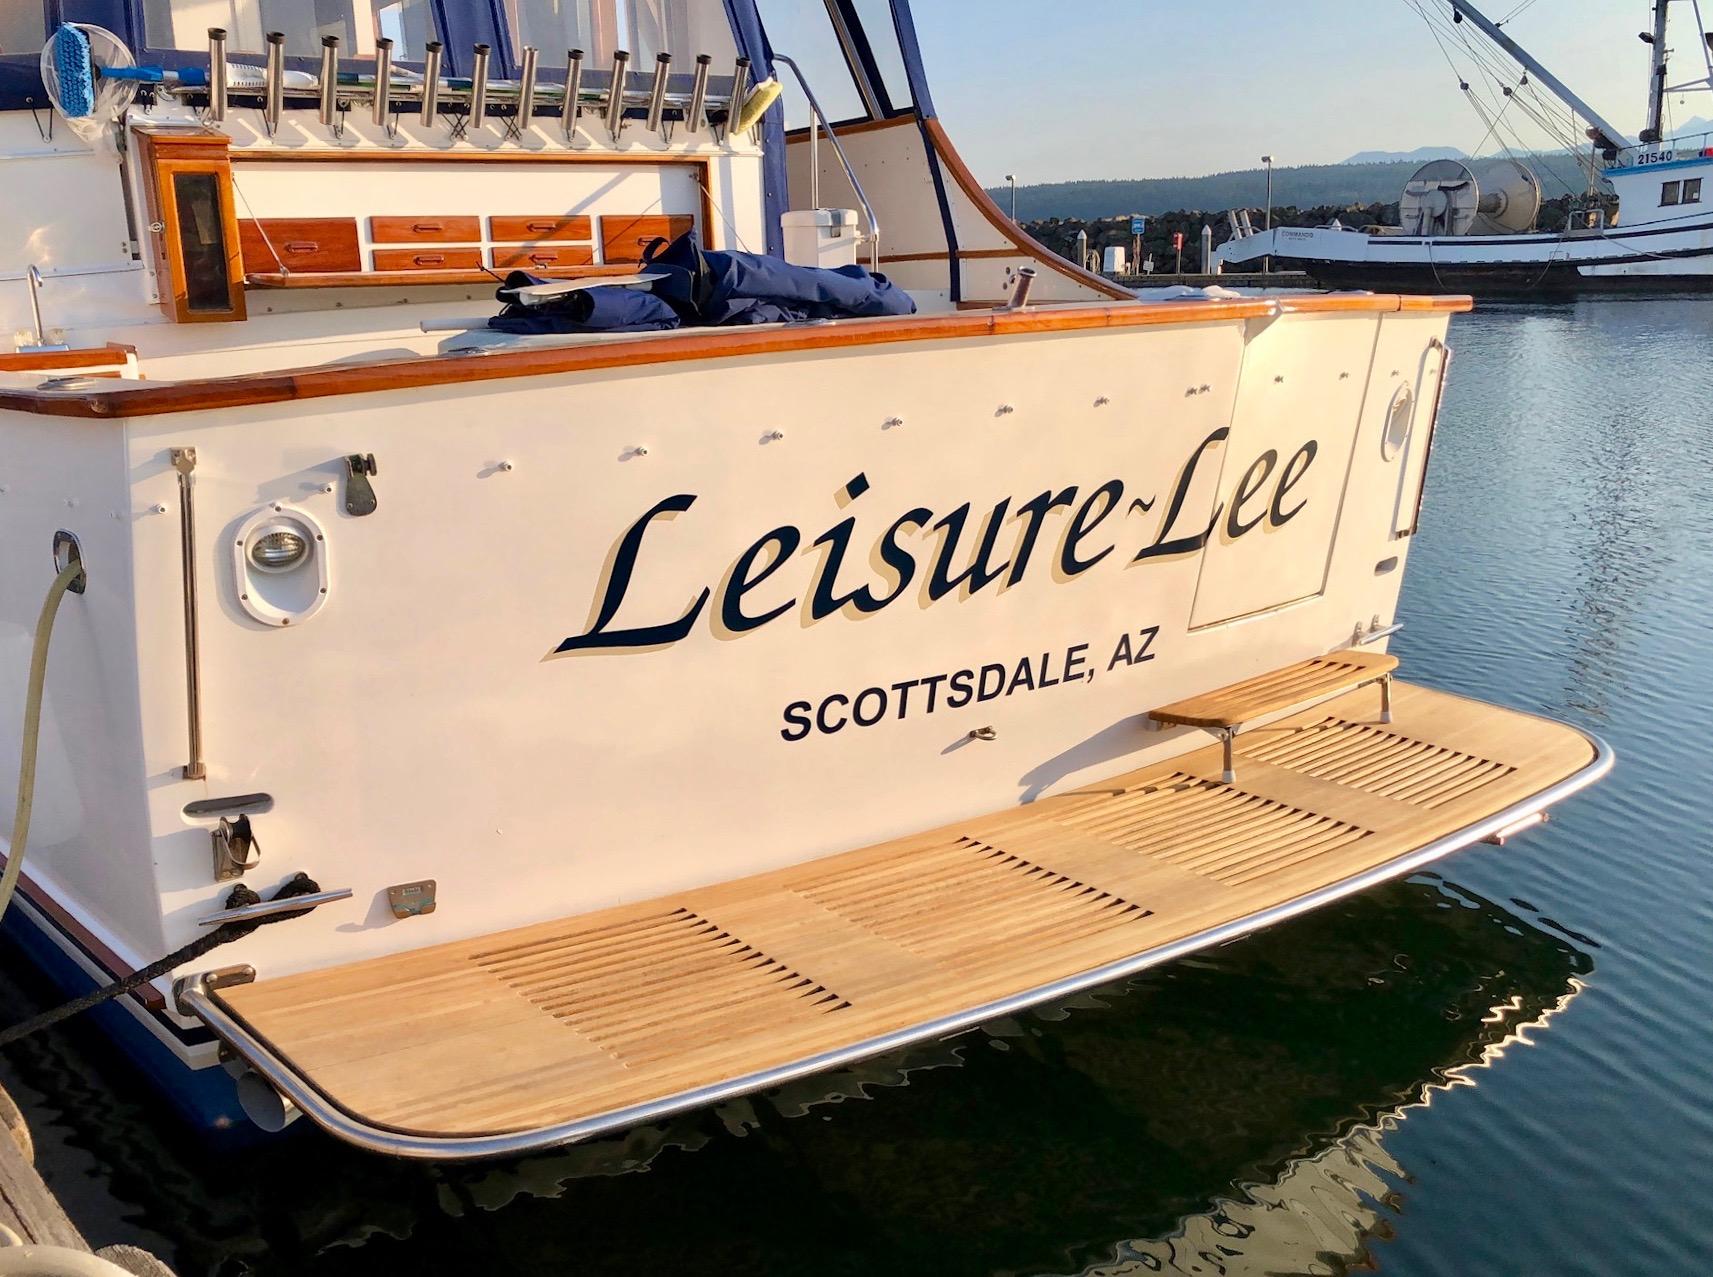 Leisure-lee Yacht Photos Pics 